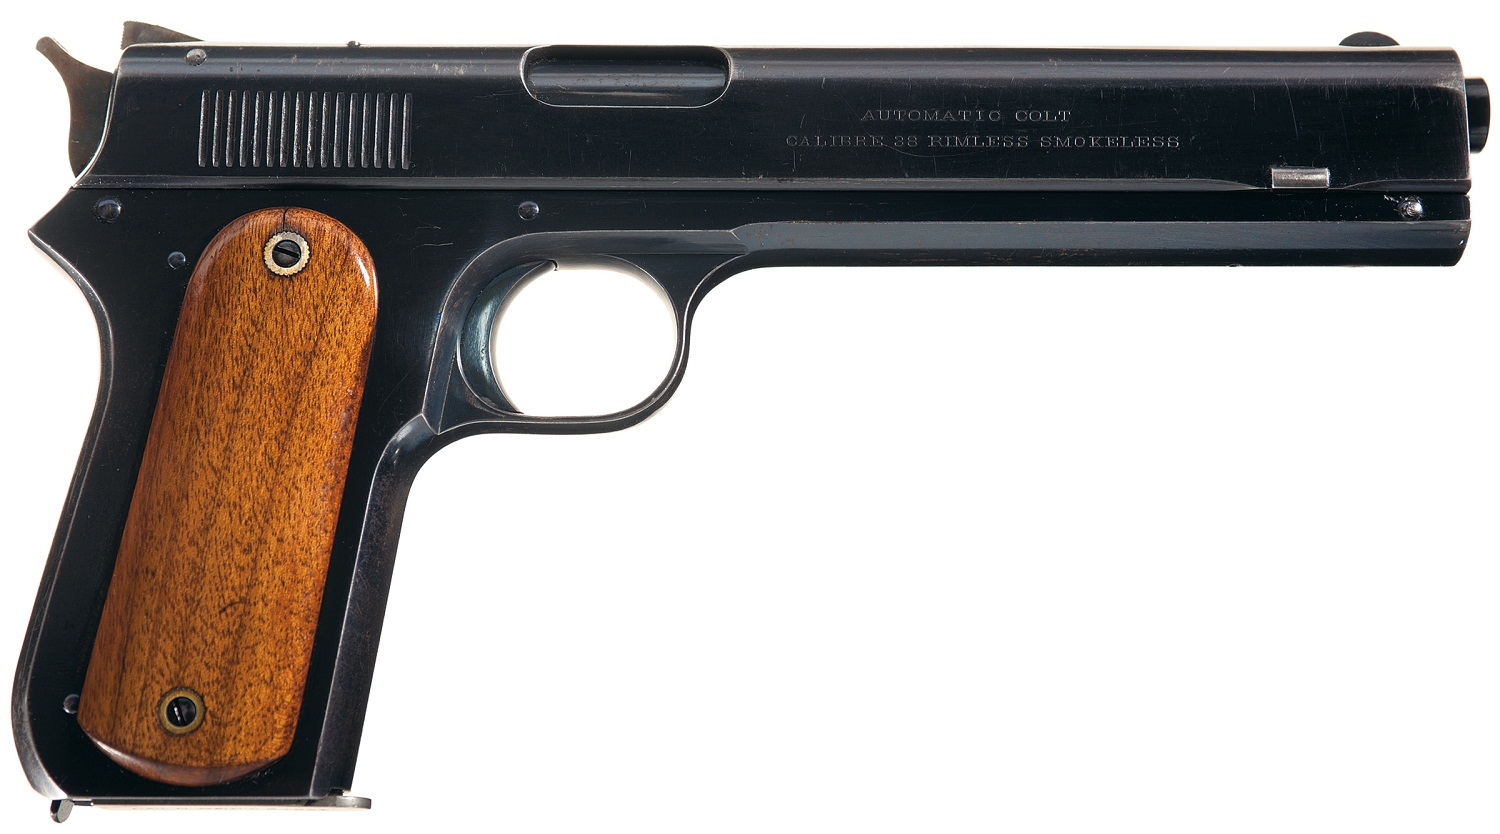 The Colt Model 1900